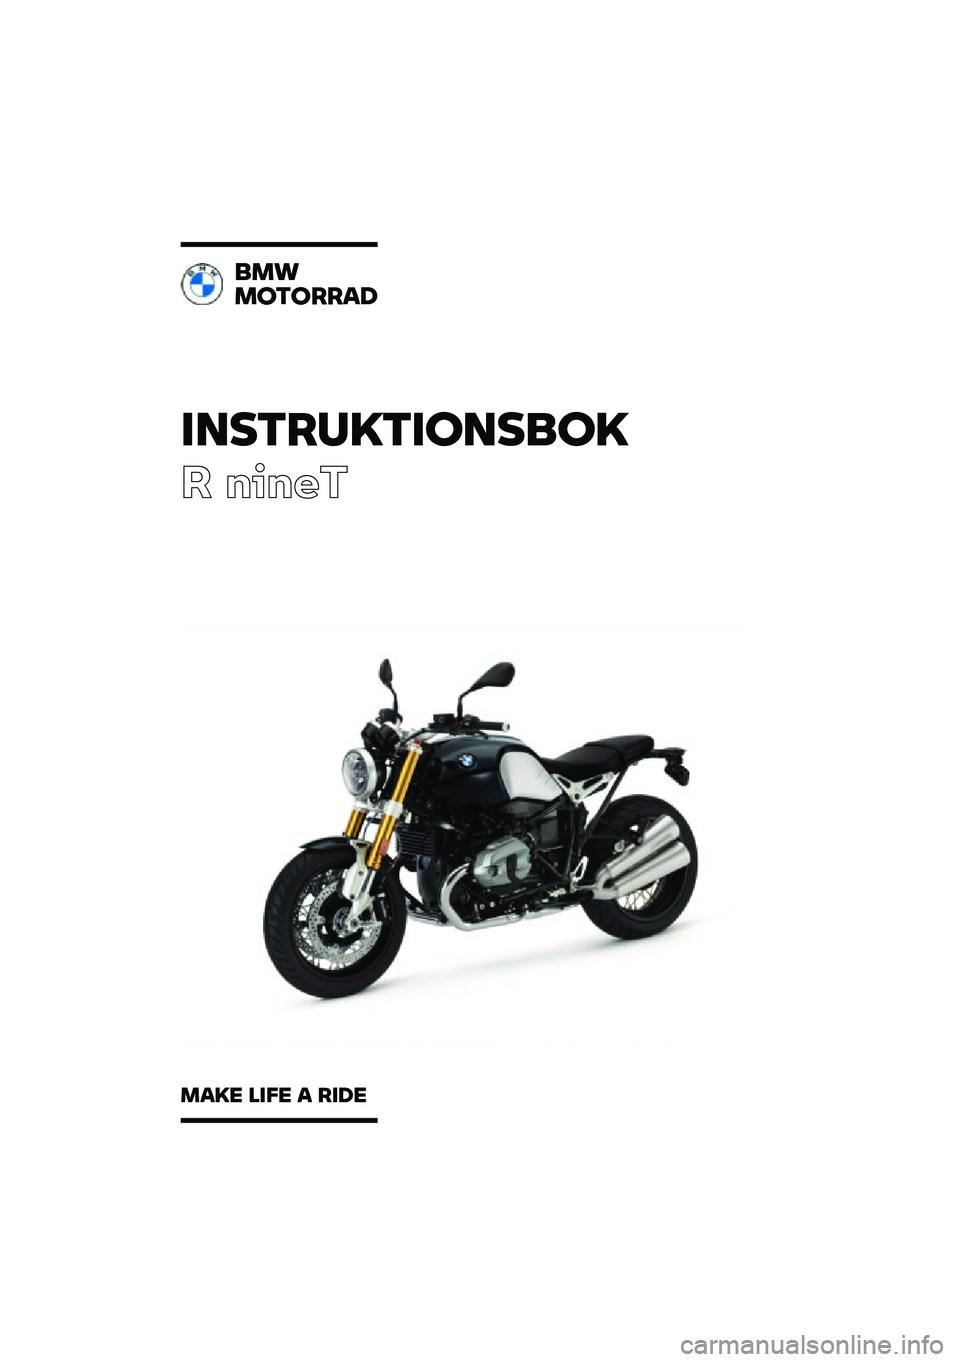 BMW MOTORRAD R NINE T 2021  Instruktionsbok (in Swedish) �������\b���	���
�	�\b
� �����
�
��\f
��	��	���
�
��
�\b� ���� �
 ���� 